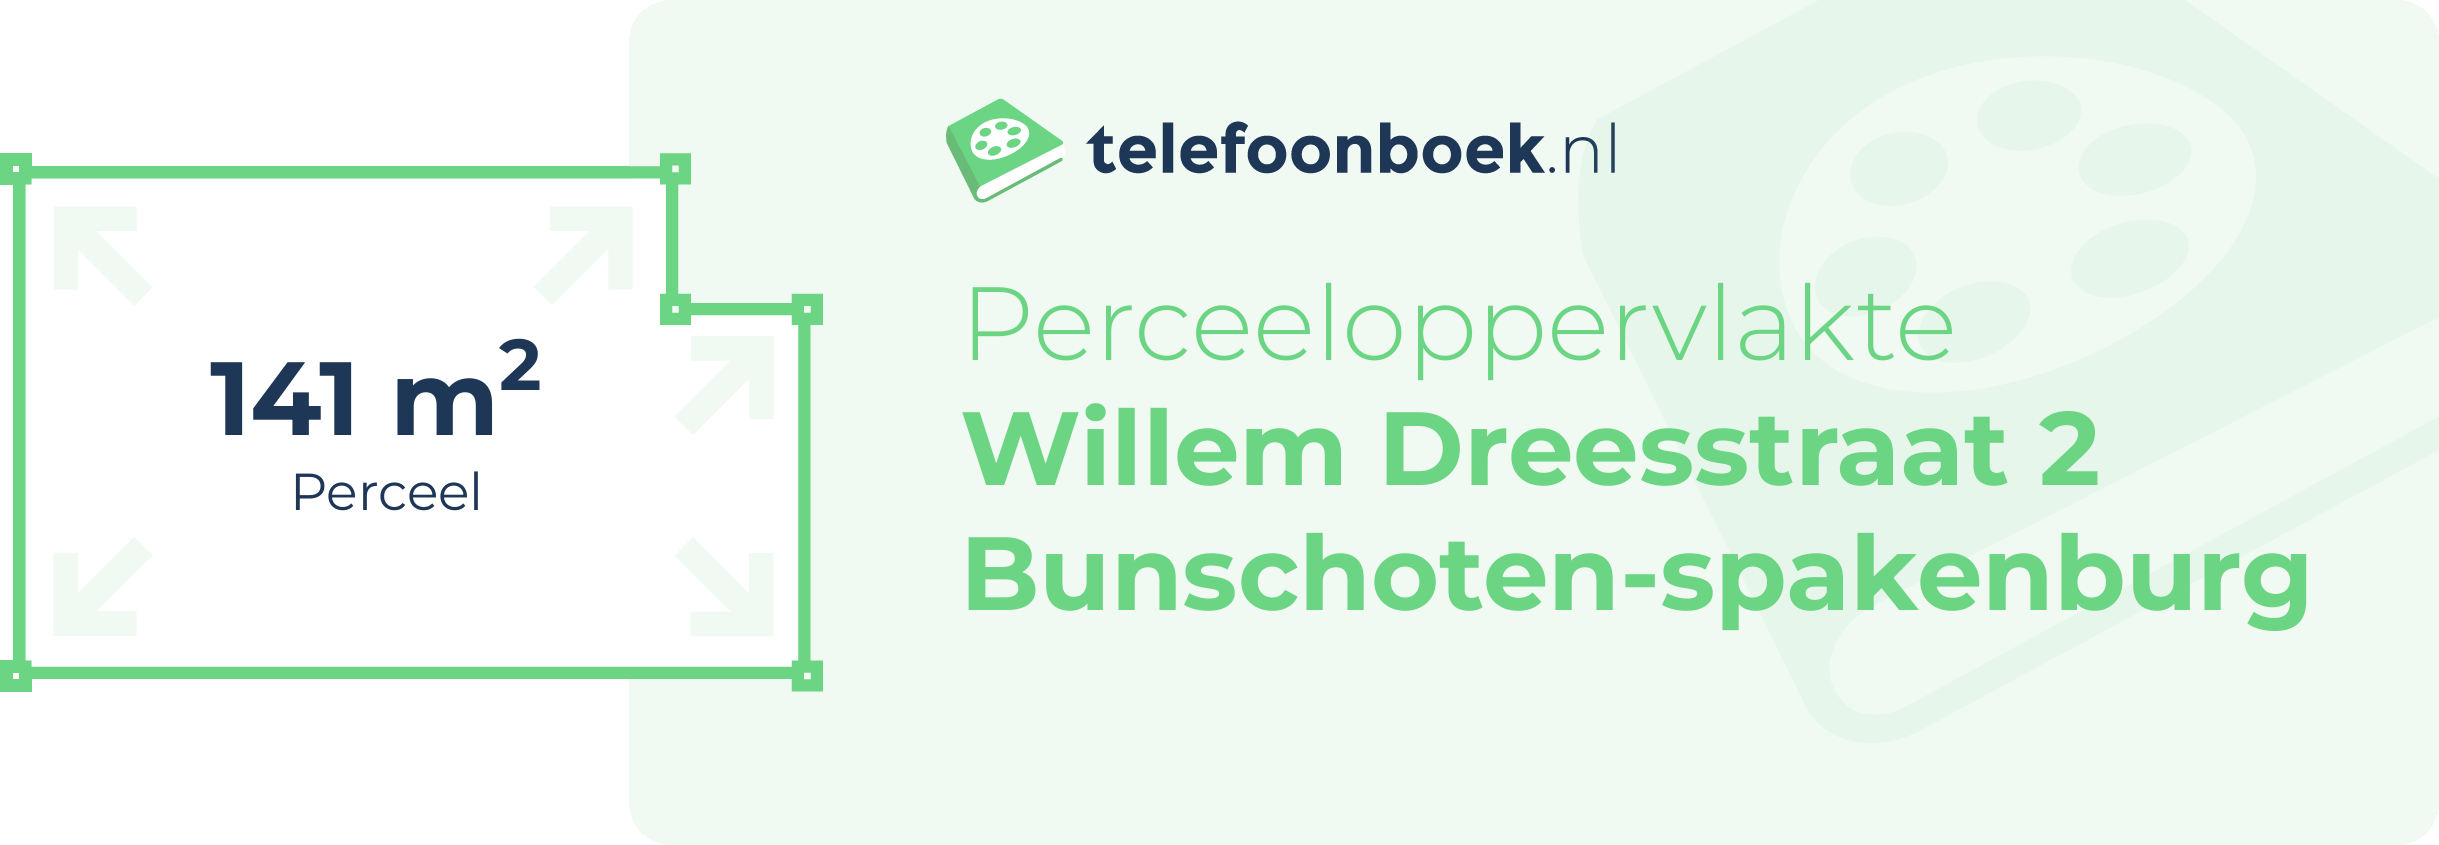 Perceeloppervlakte Willem Dreesstraat 2 Bunschoten-Spakenburg